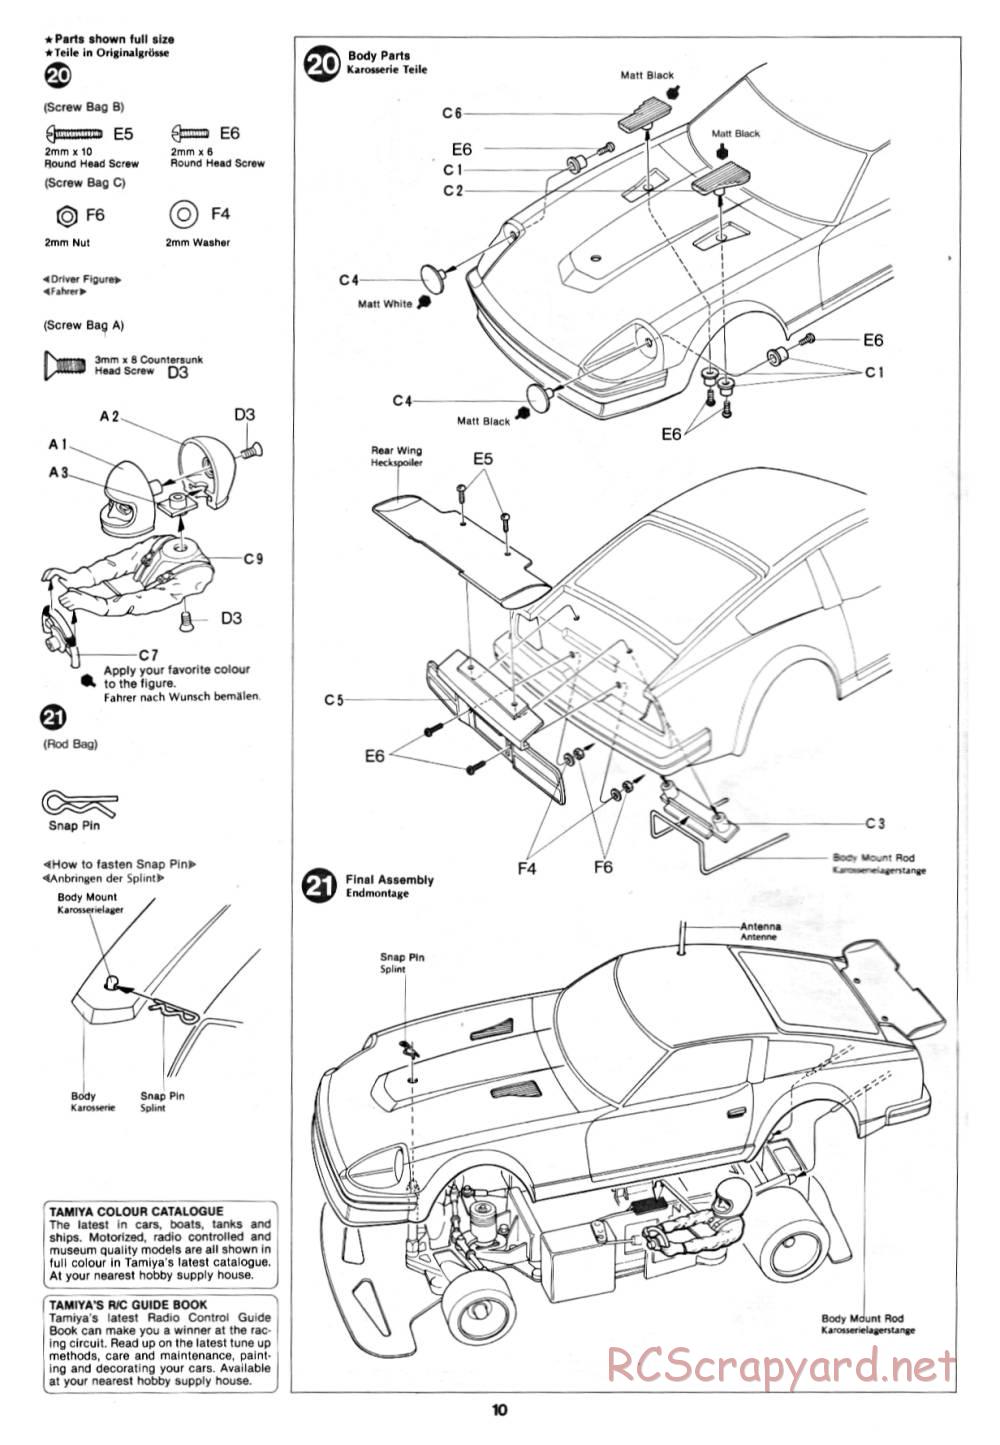 Tamiya - Datsun 280ZX - 58022 - Manual - Page 10